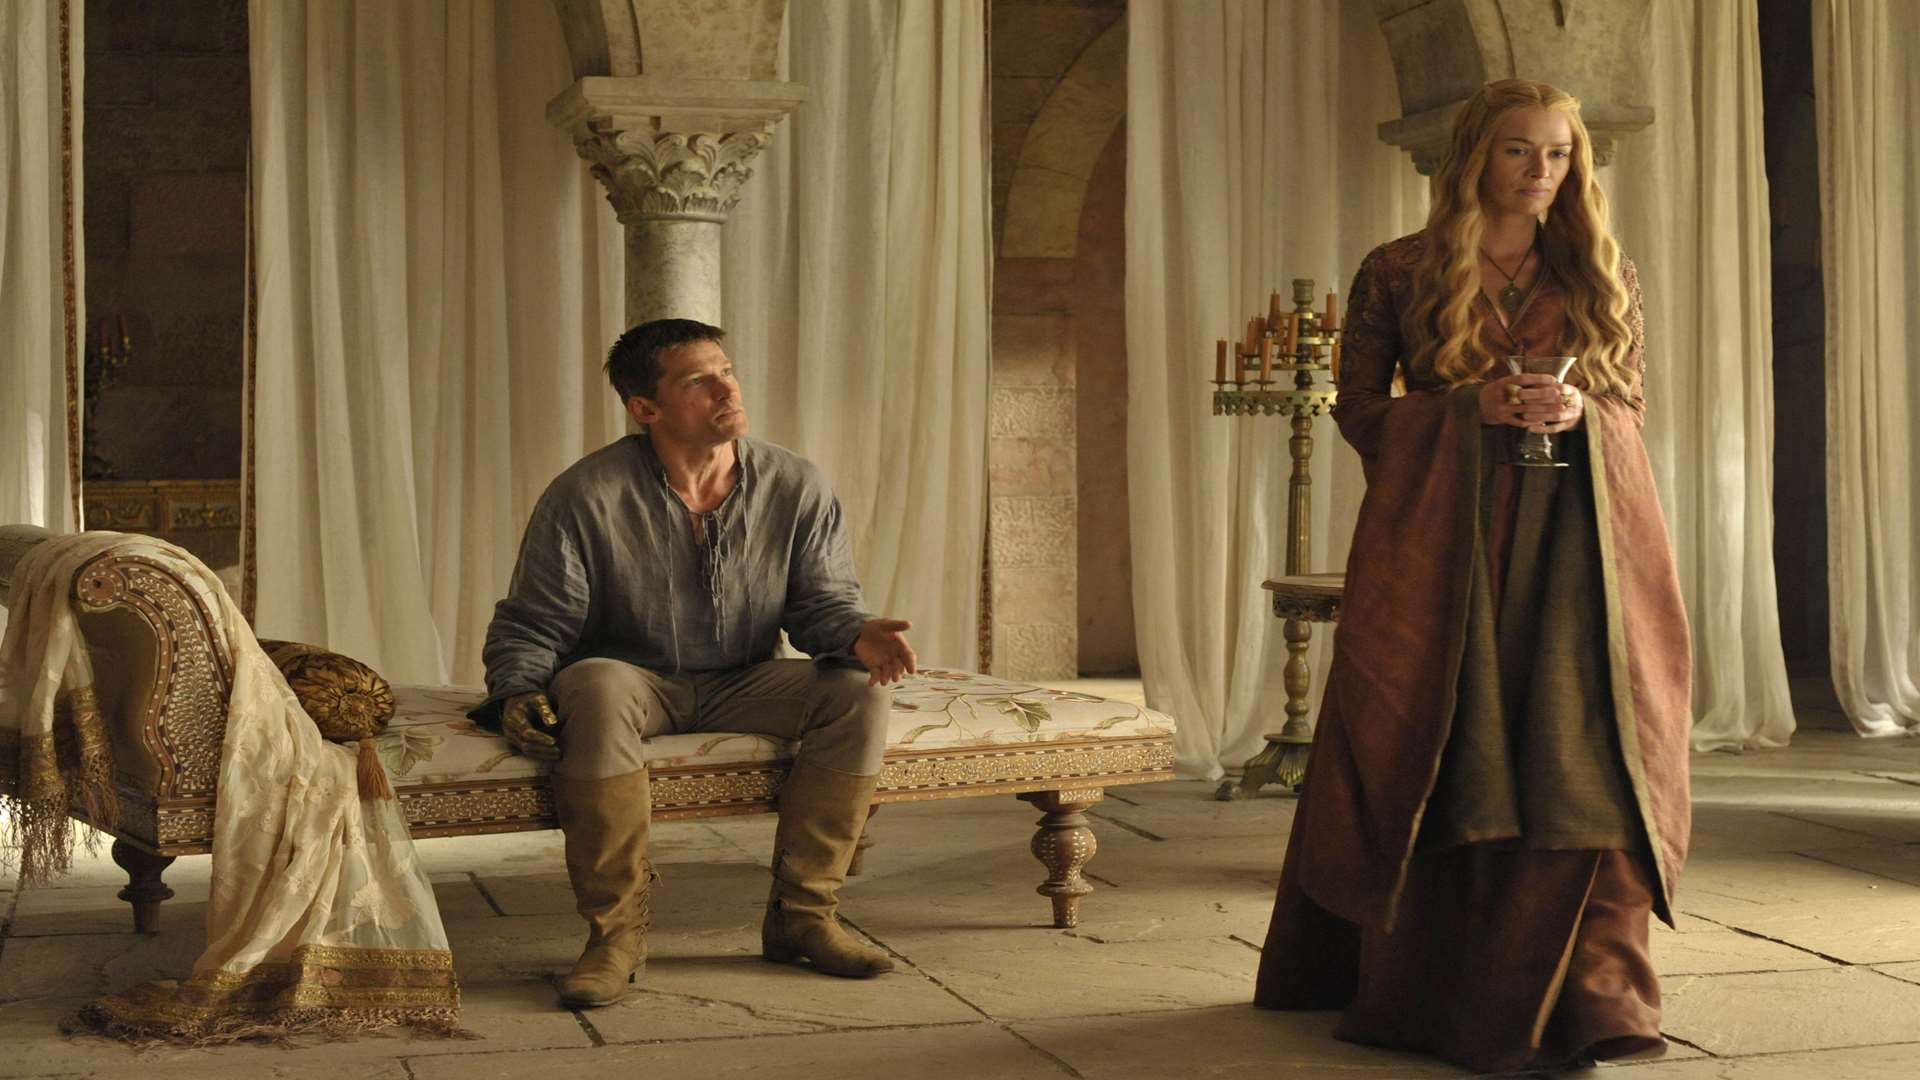 Nikolaj Coster-Waldau as Ser Jaime Lannister and Lena Headey as Cersei Lannister in Game of Thrones